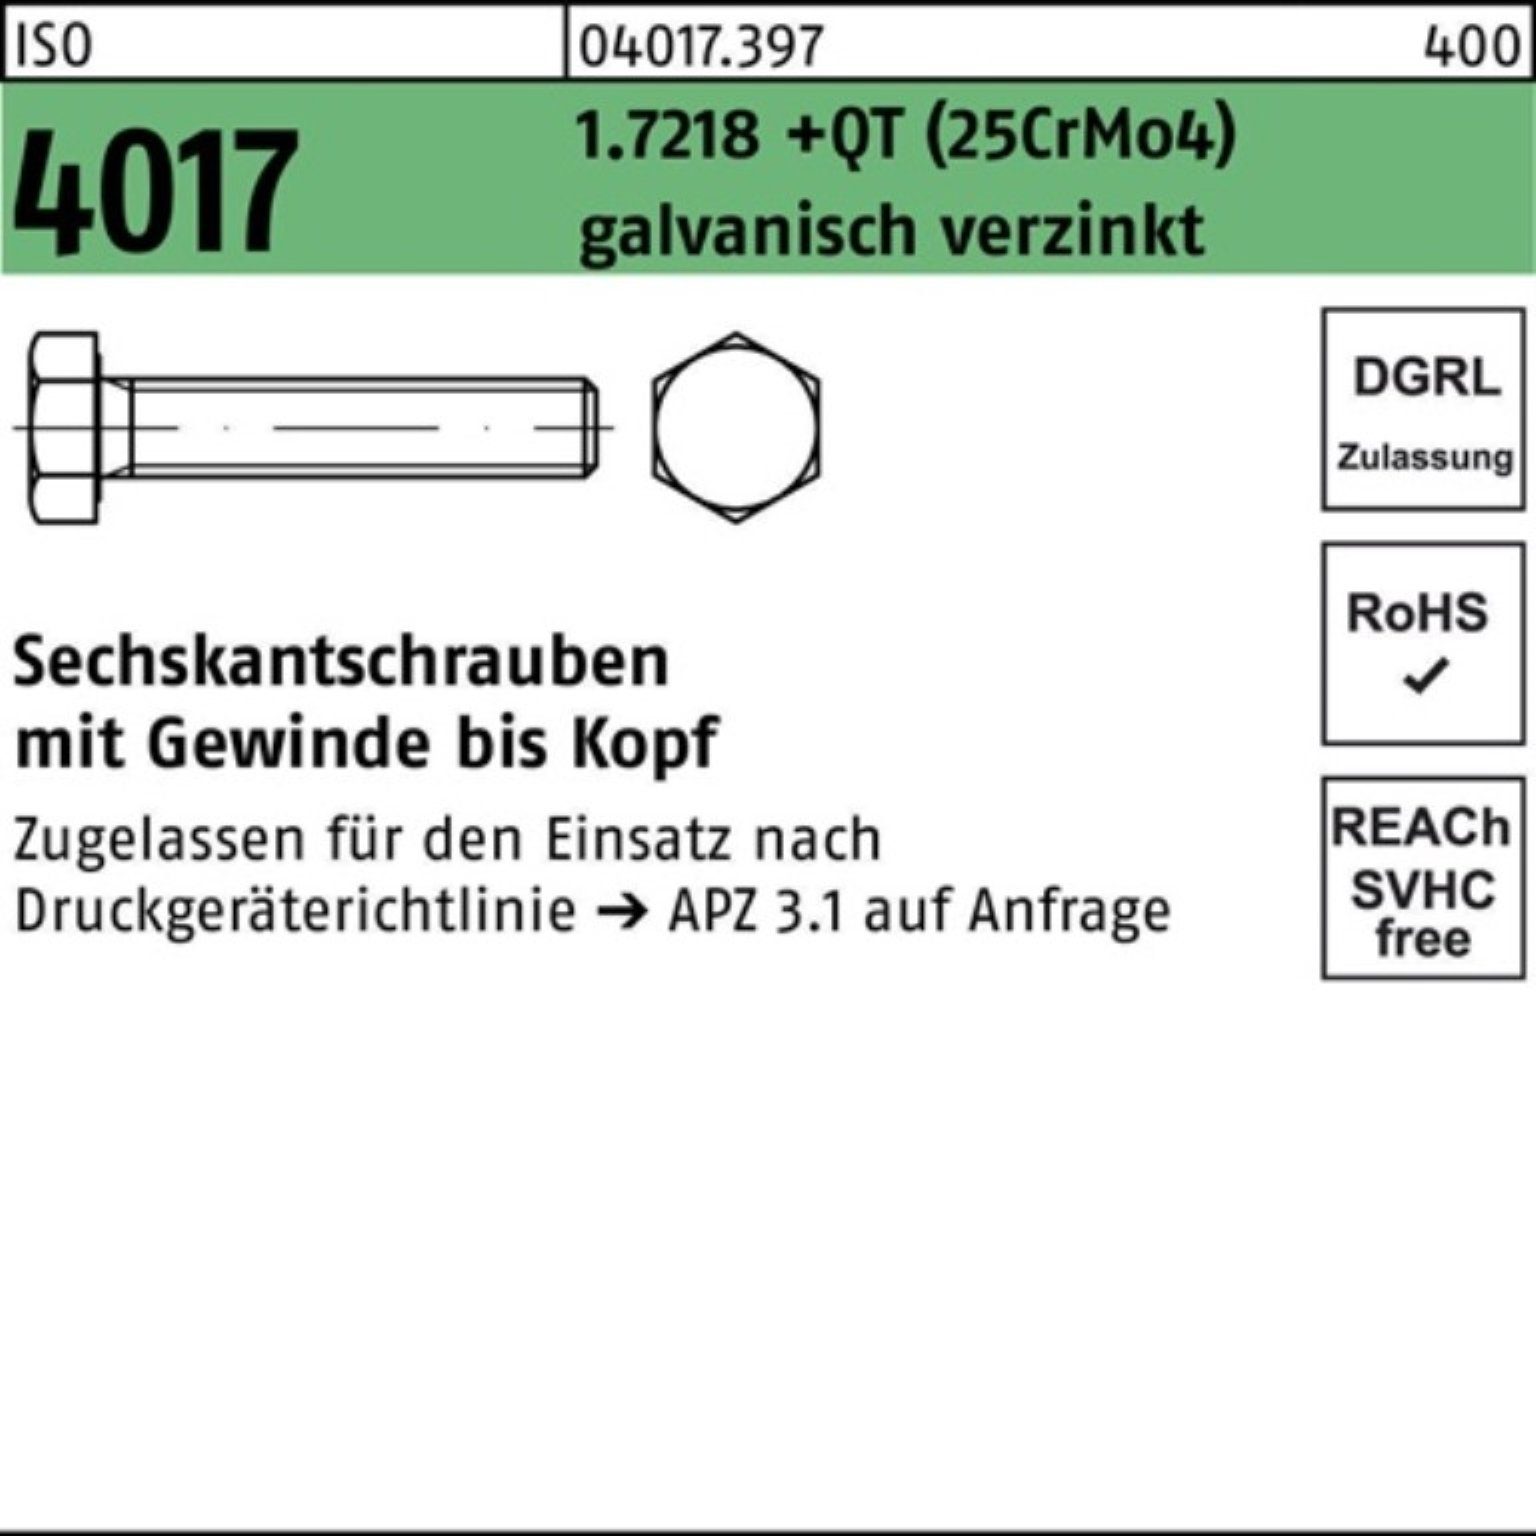 Bufab Sechskantschraube 100er Pack Sechskantschraube 1.7218 ISO g +QT VG (25CrMo4) M27x65 4017